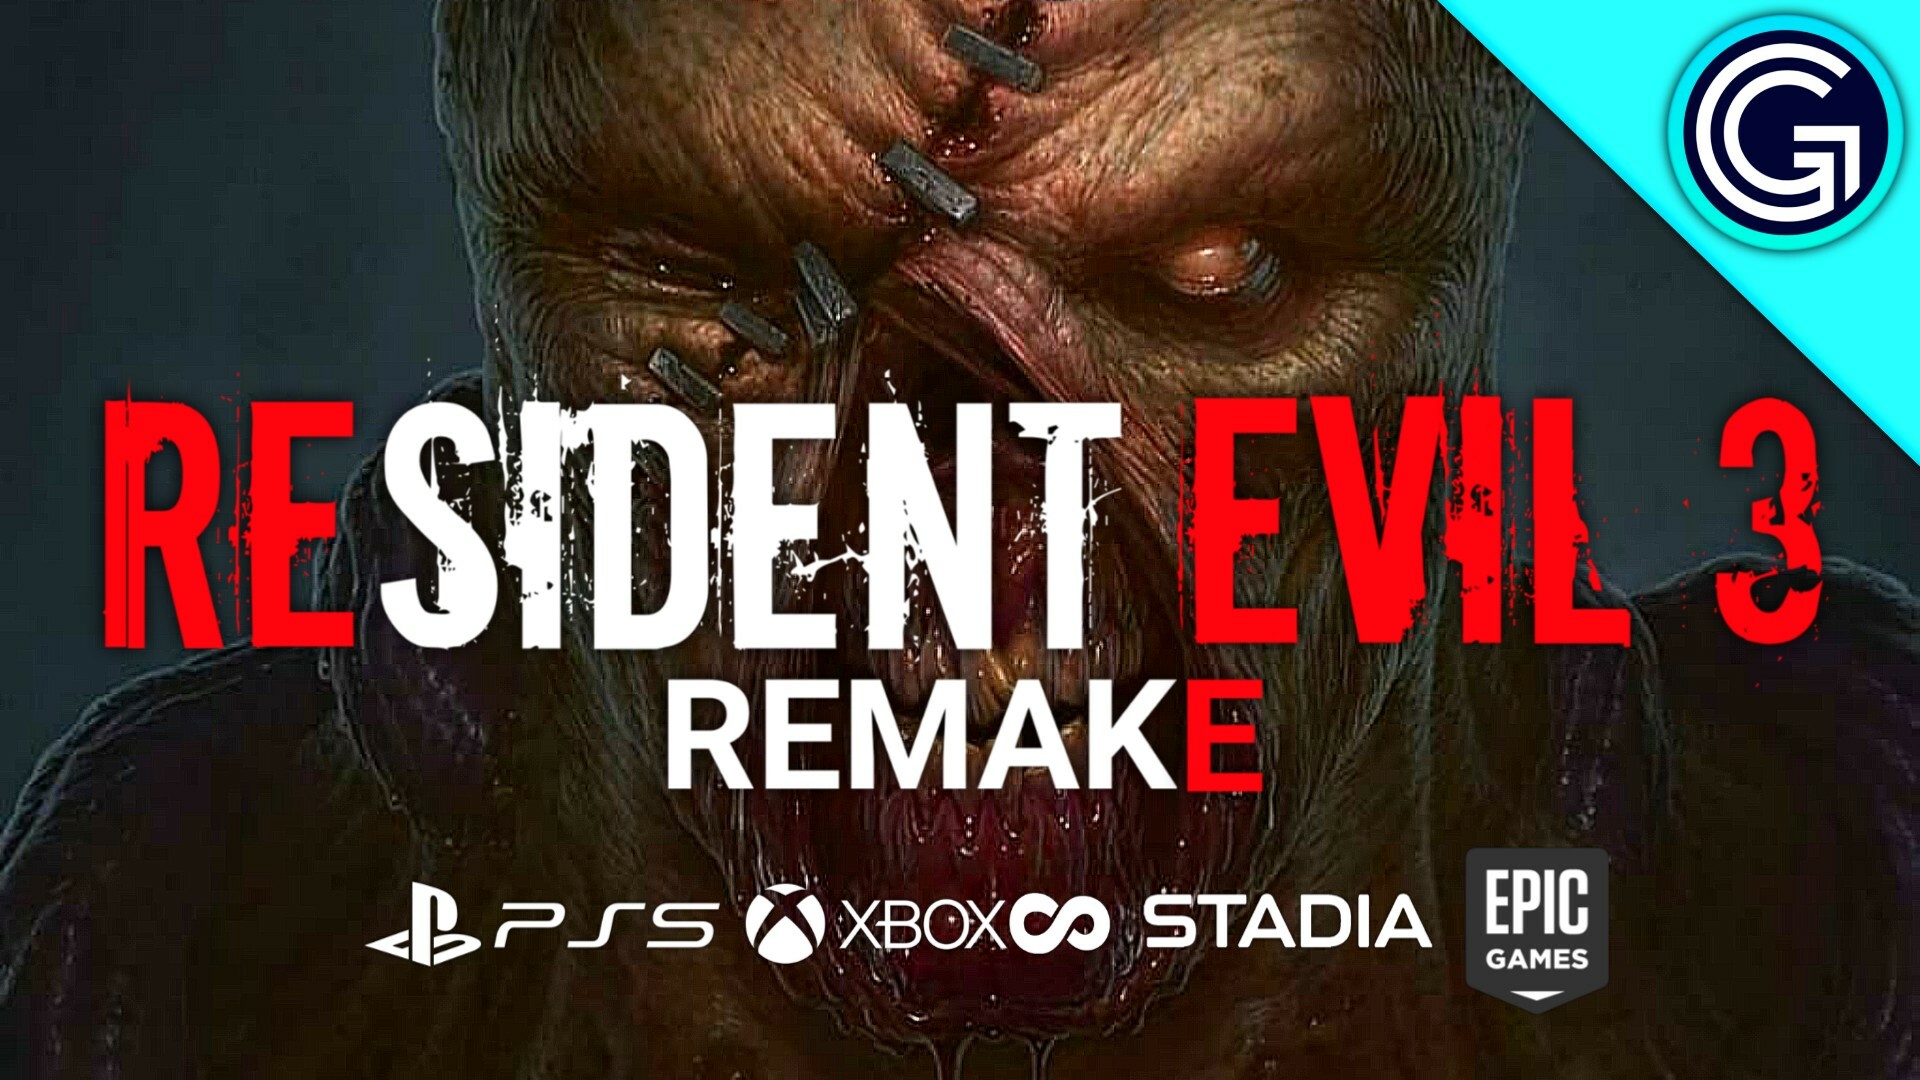 Trailer giới thiệu Nemesis của Resident Evil 3 remake